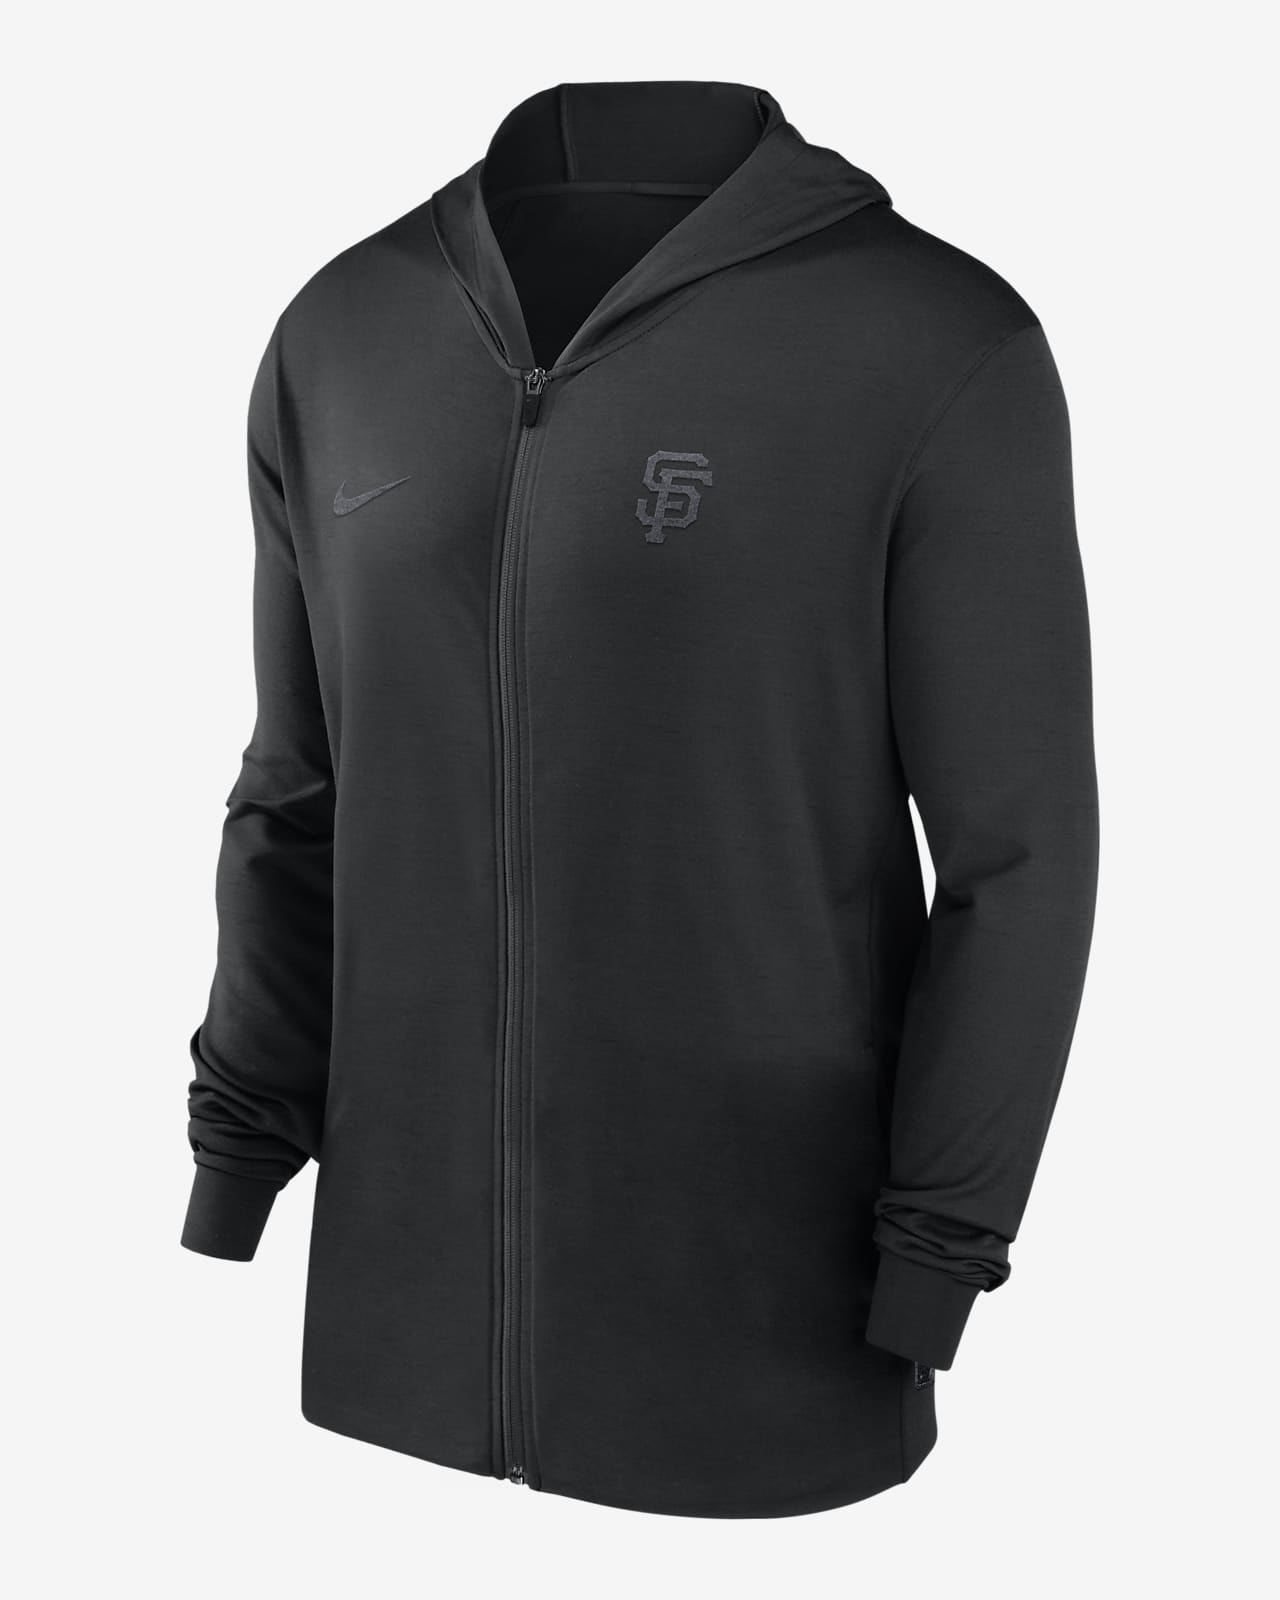 Travel (MLB Francisco Giants) Men's Full-Zip Hoodie. Nike .com